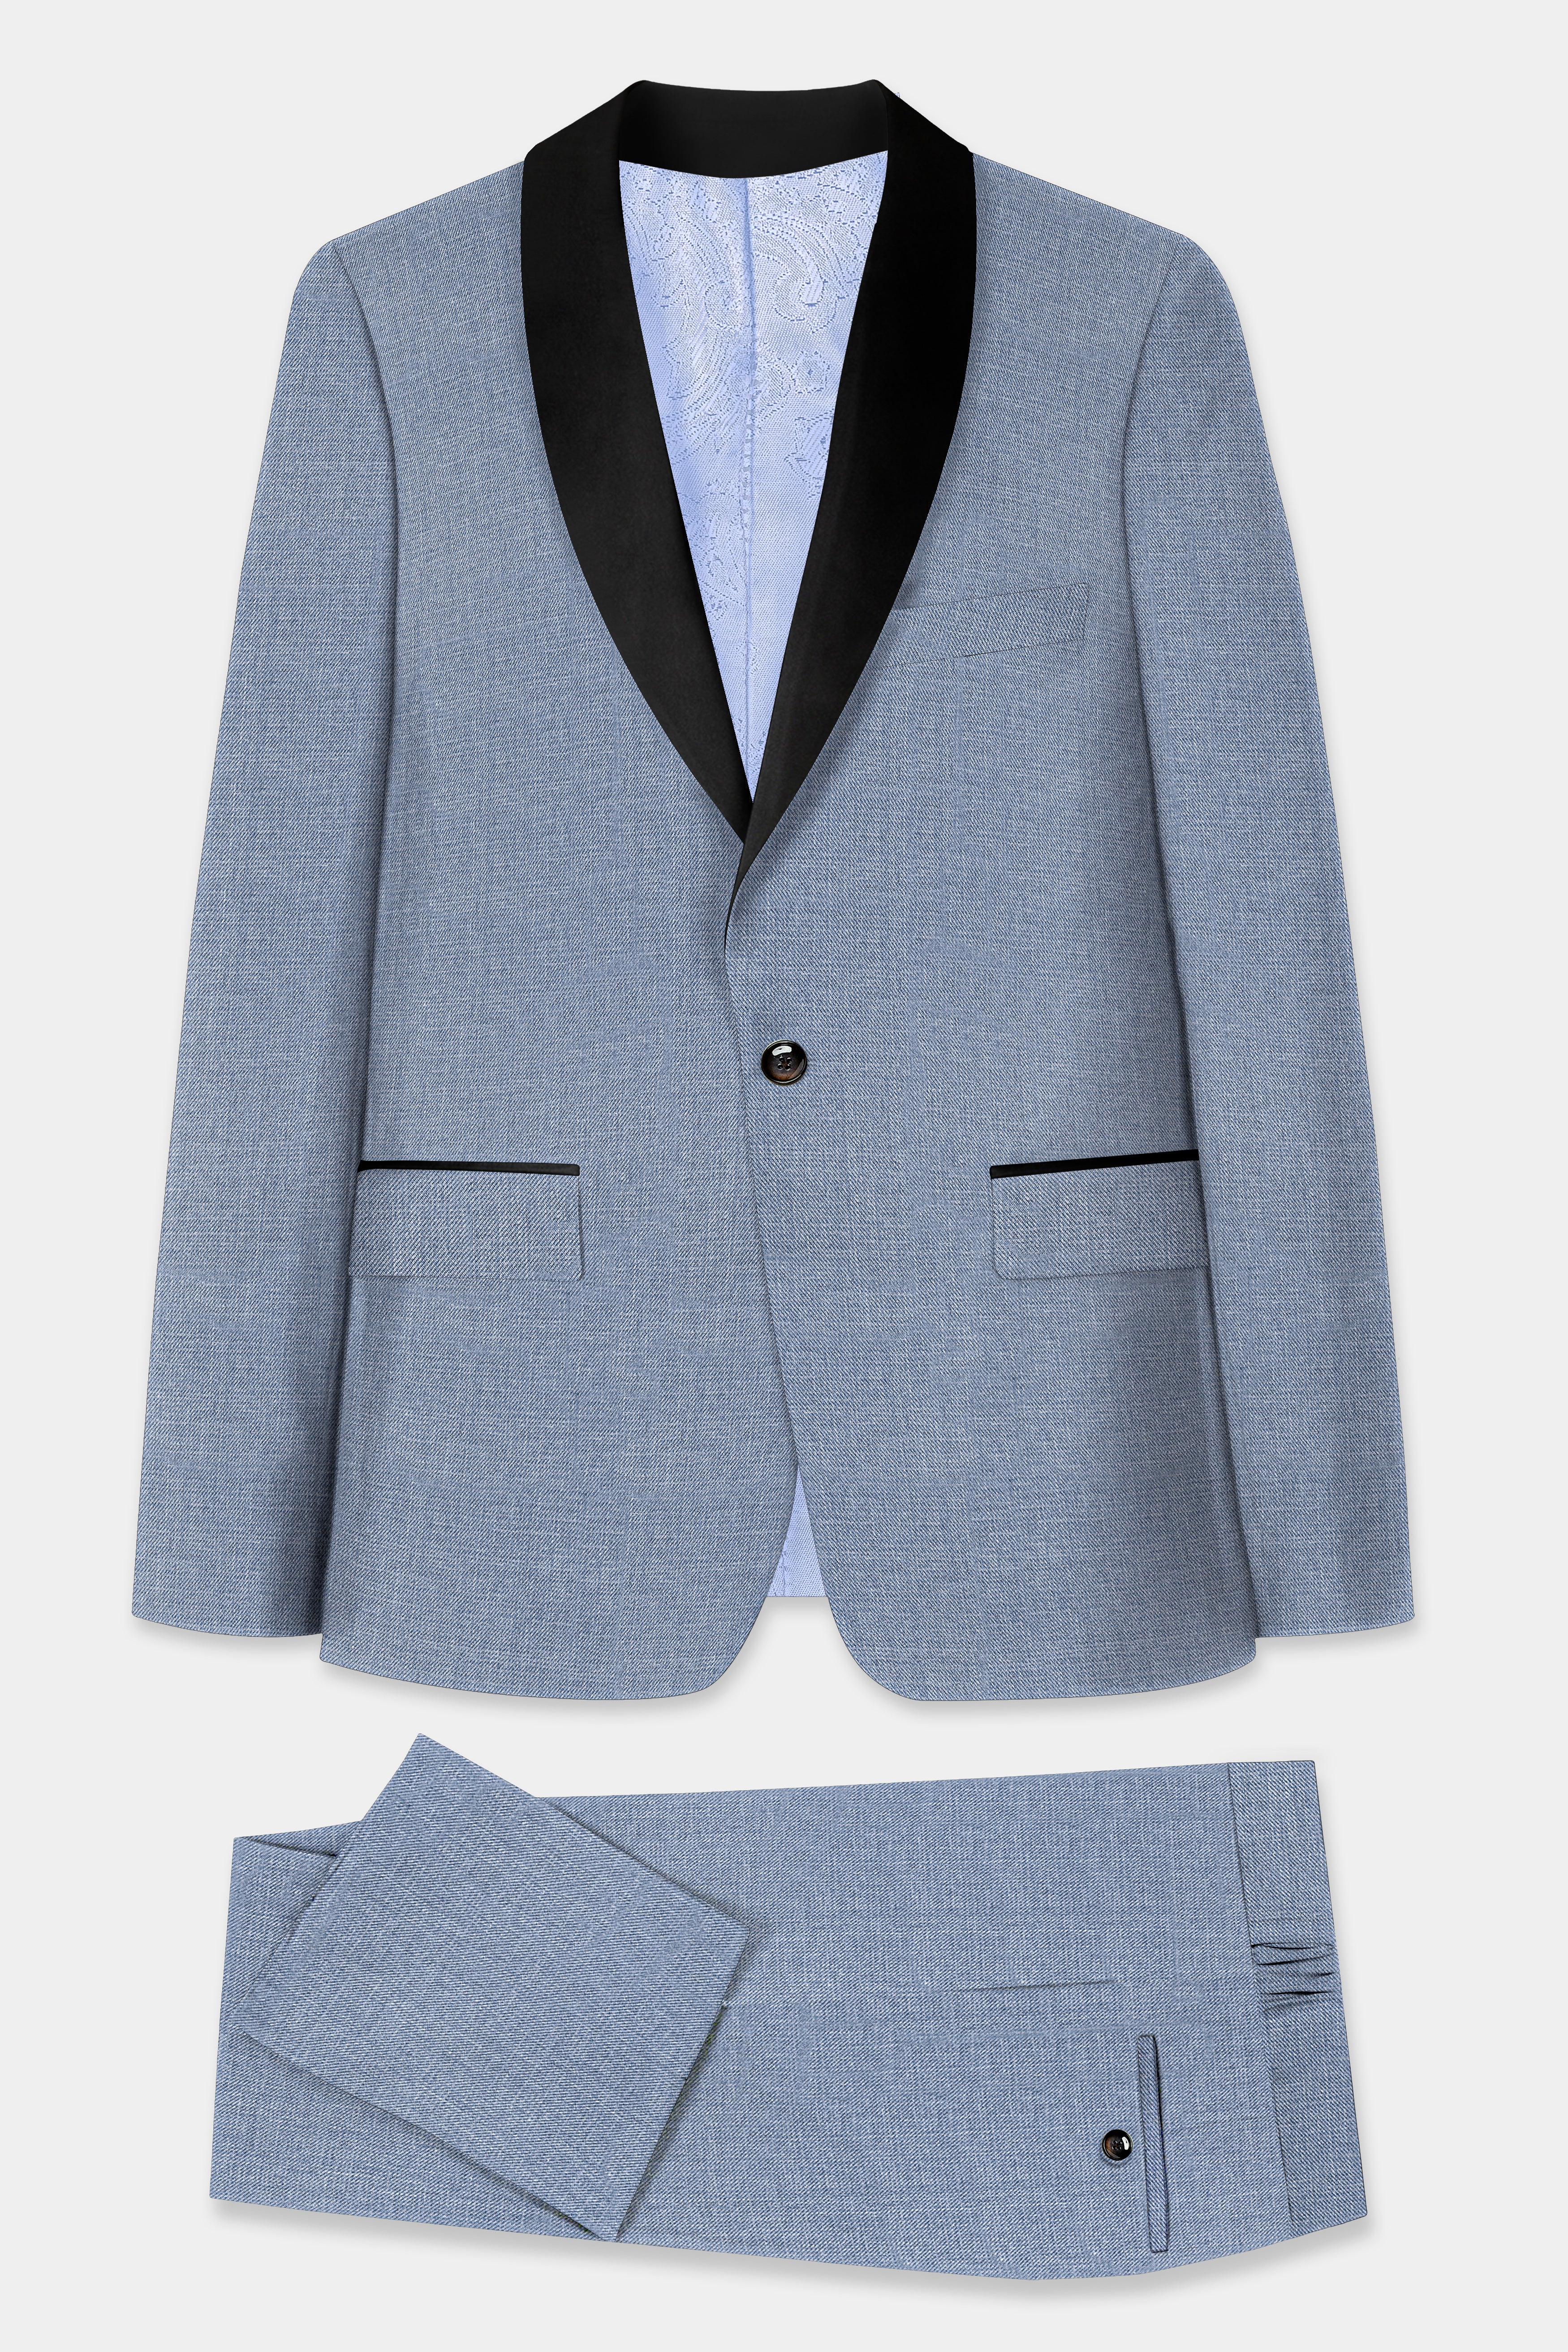 Bluish Wool Rich Tuxedo Suit